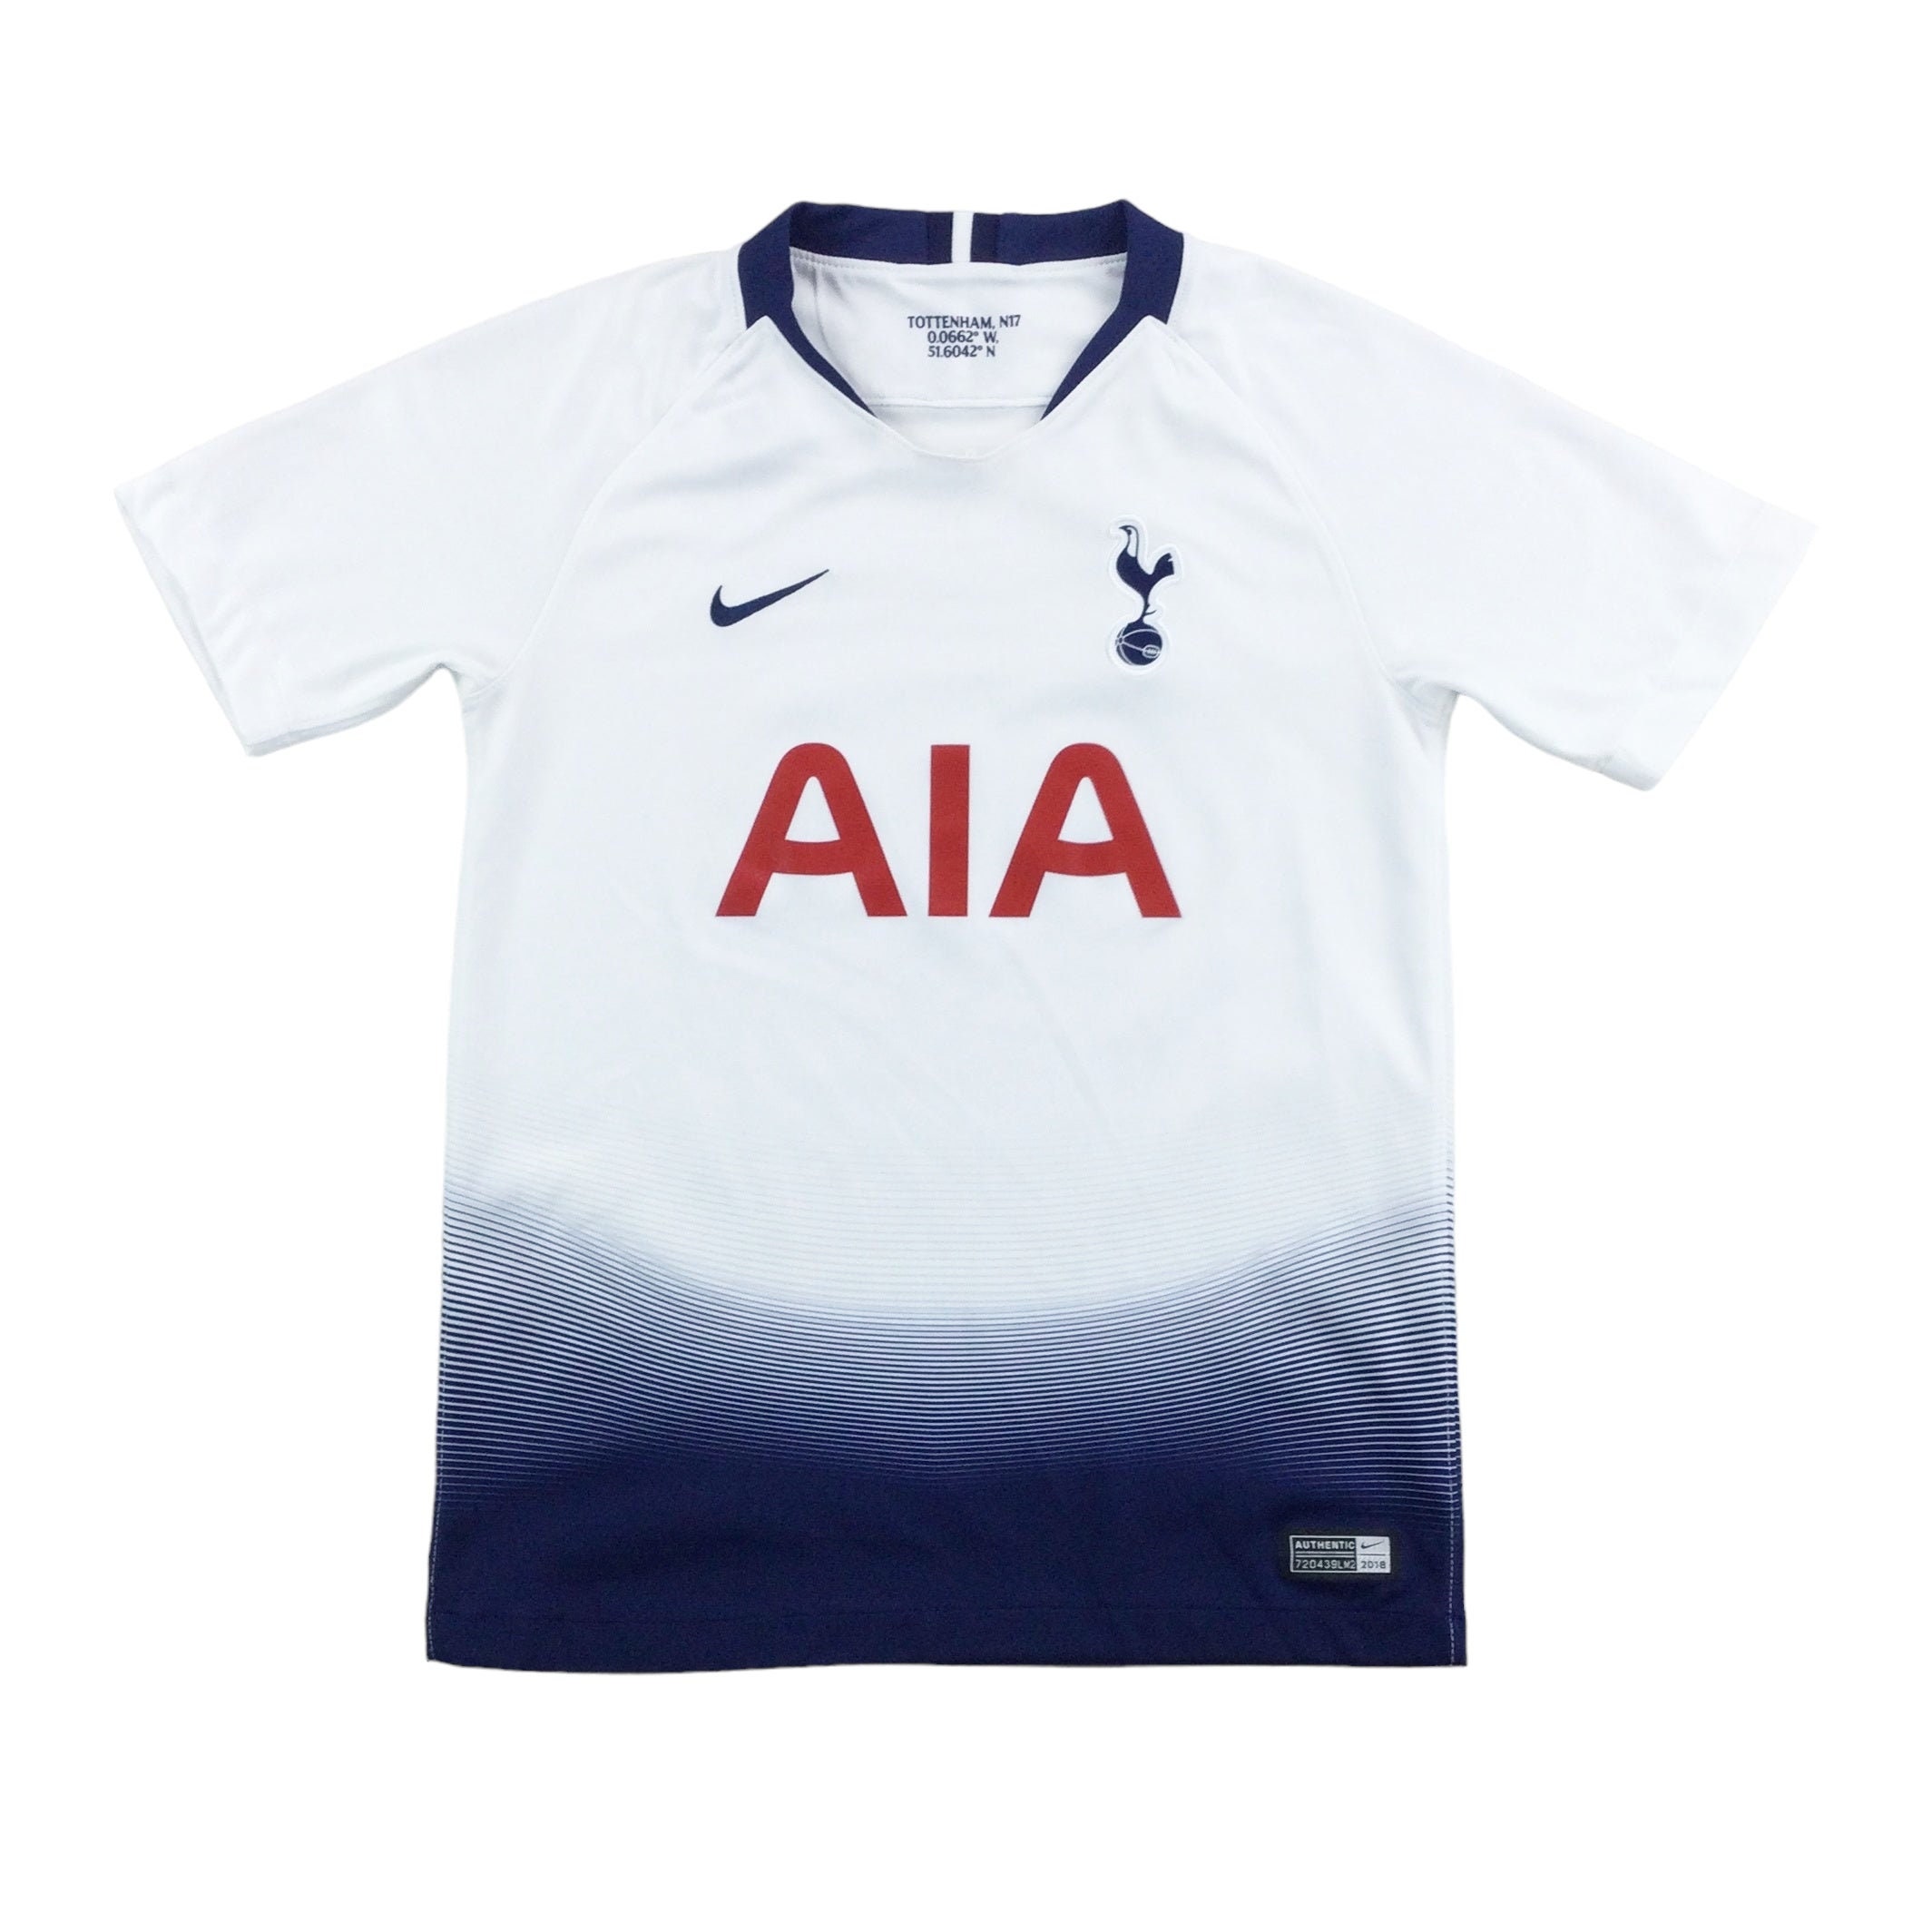 Tottenham New 3rd Kit,Tottenham 2013 3rd Kit,Tottenham 3rd green kid kit  Size:18-19